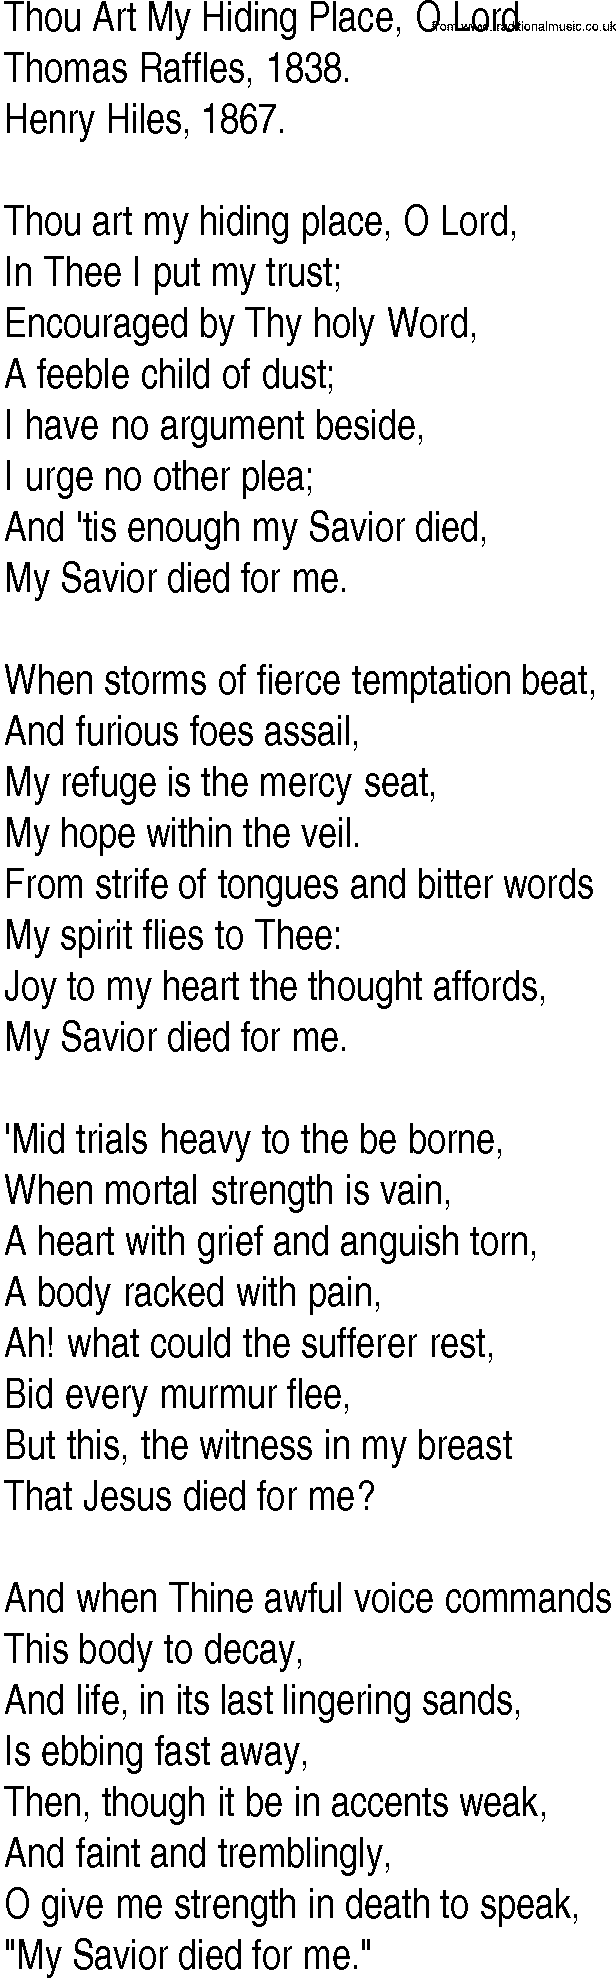 Hymn and Gospel Song: Thou Art My Hiding Place, O Lord by Thomas Raffles lyrics